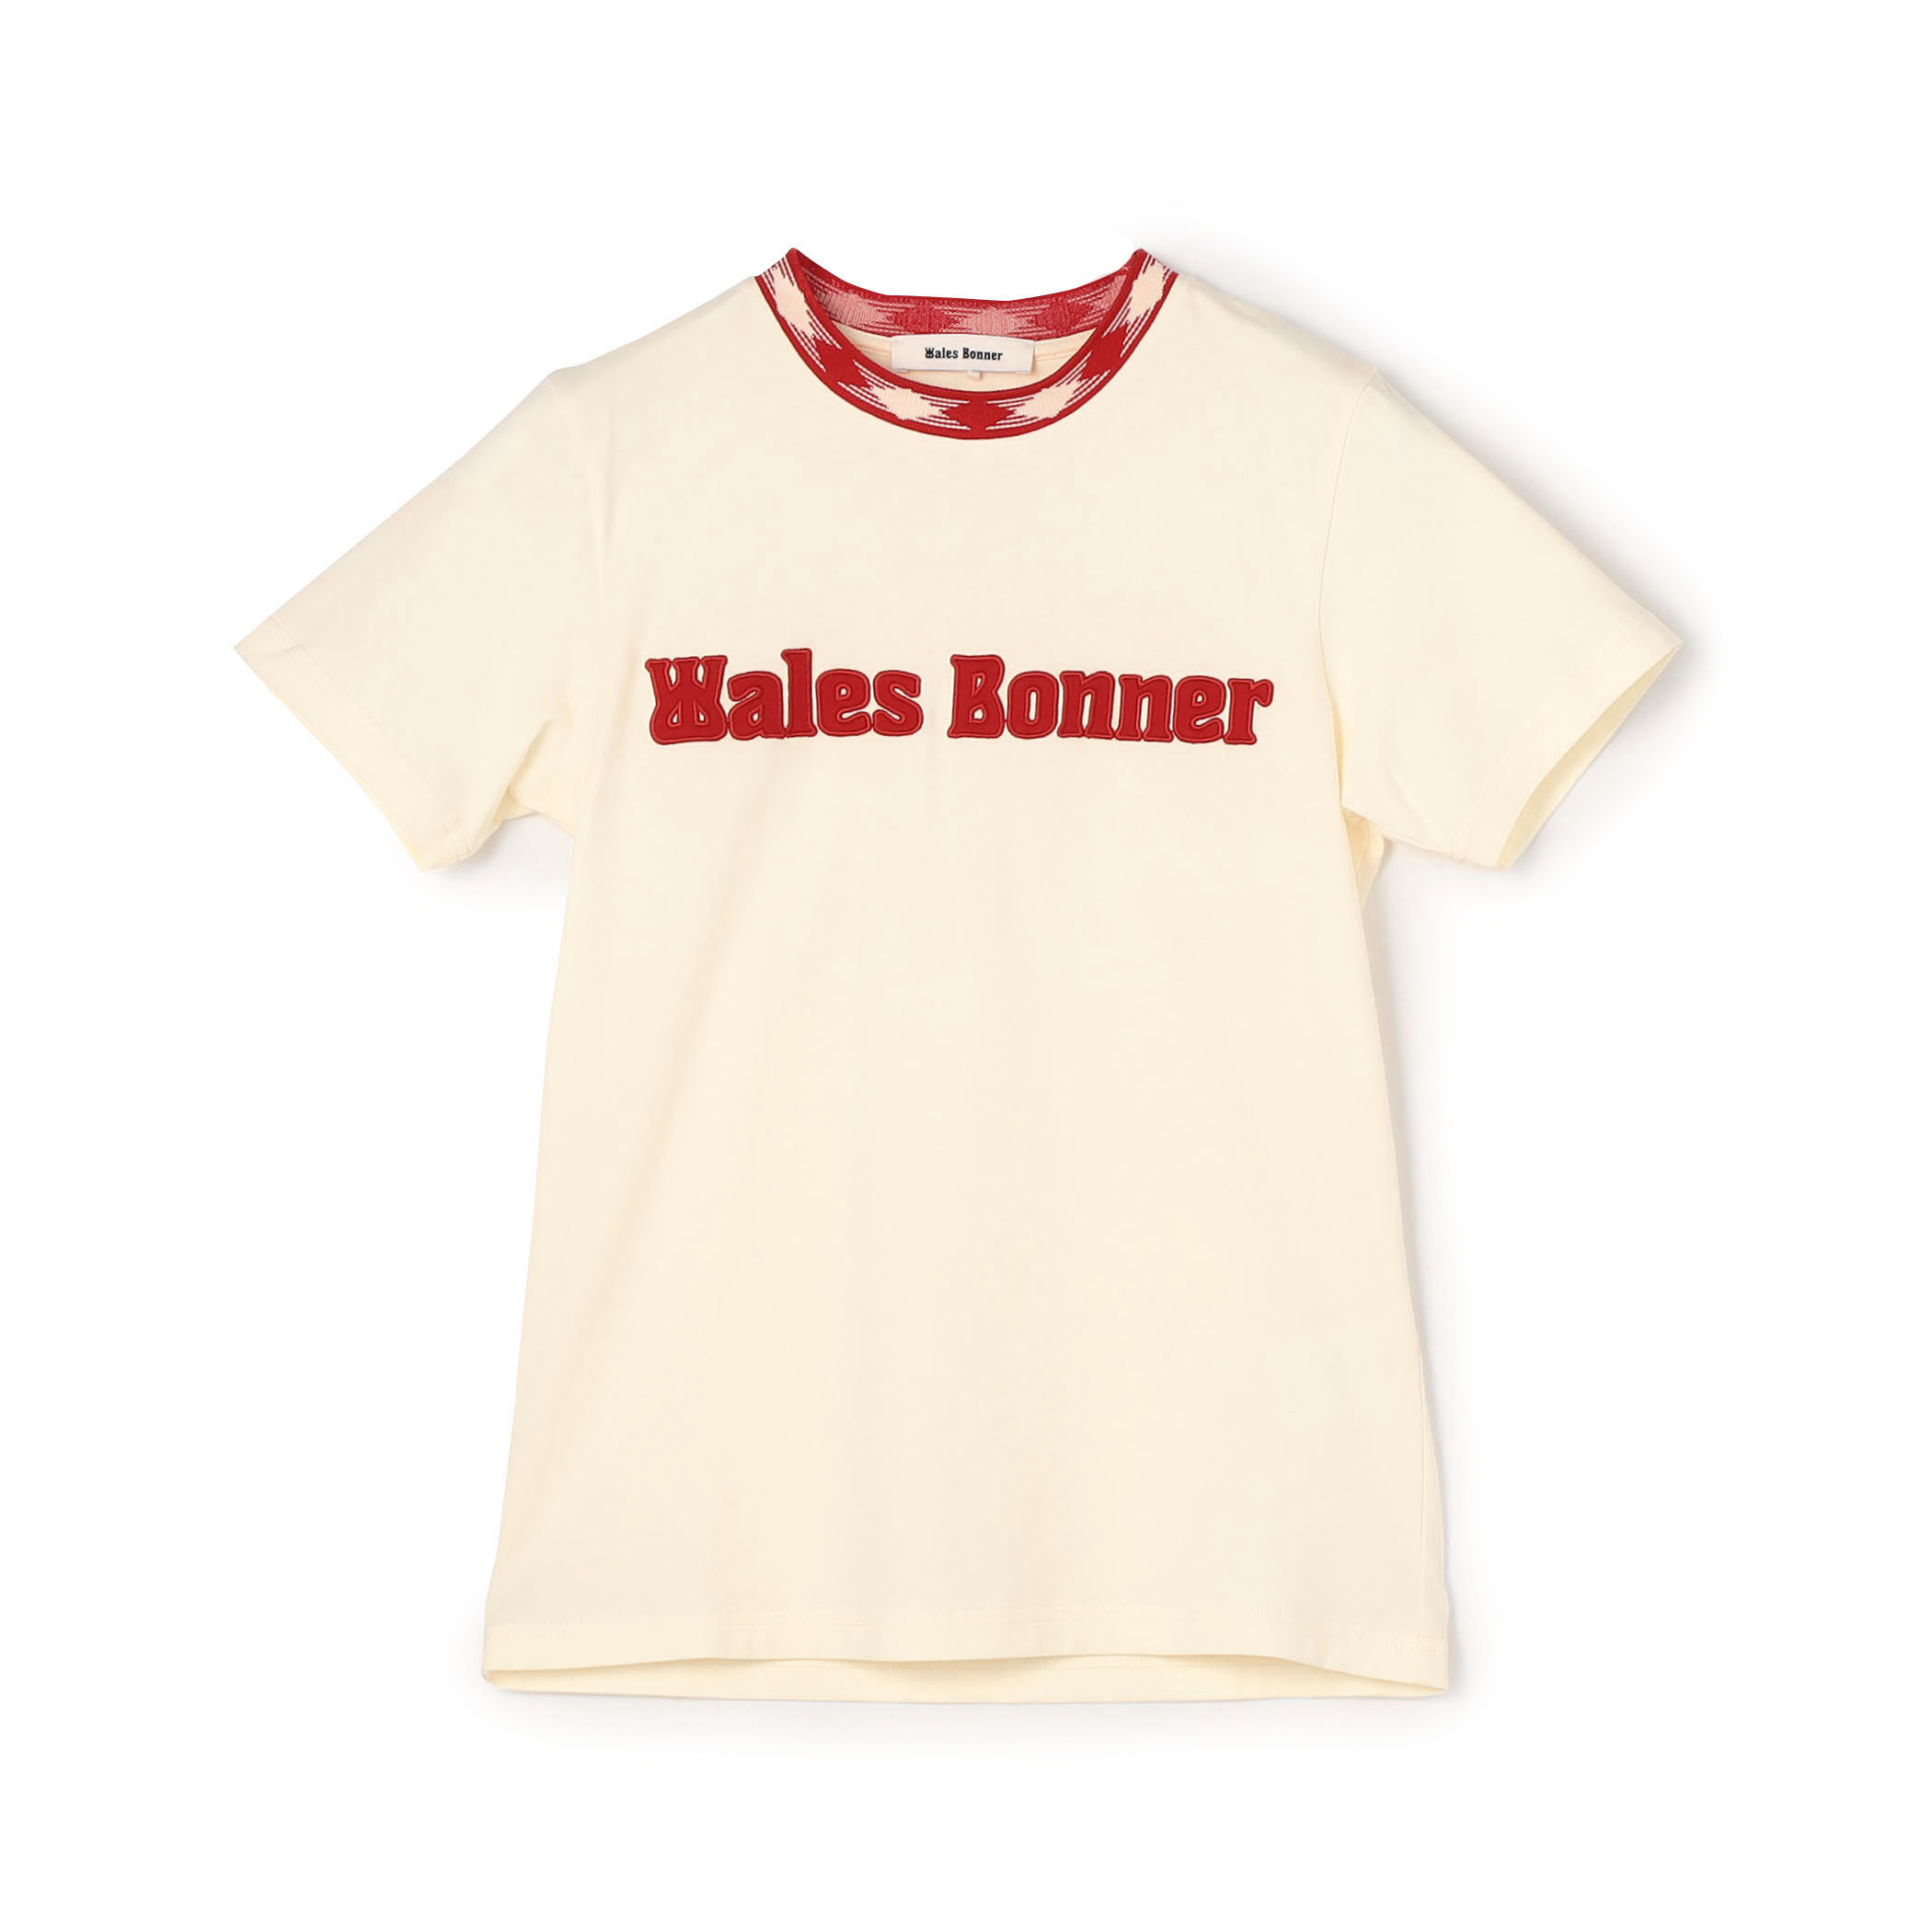 WALES BONNER(ウェールズ・ボナー) Original Tee定価